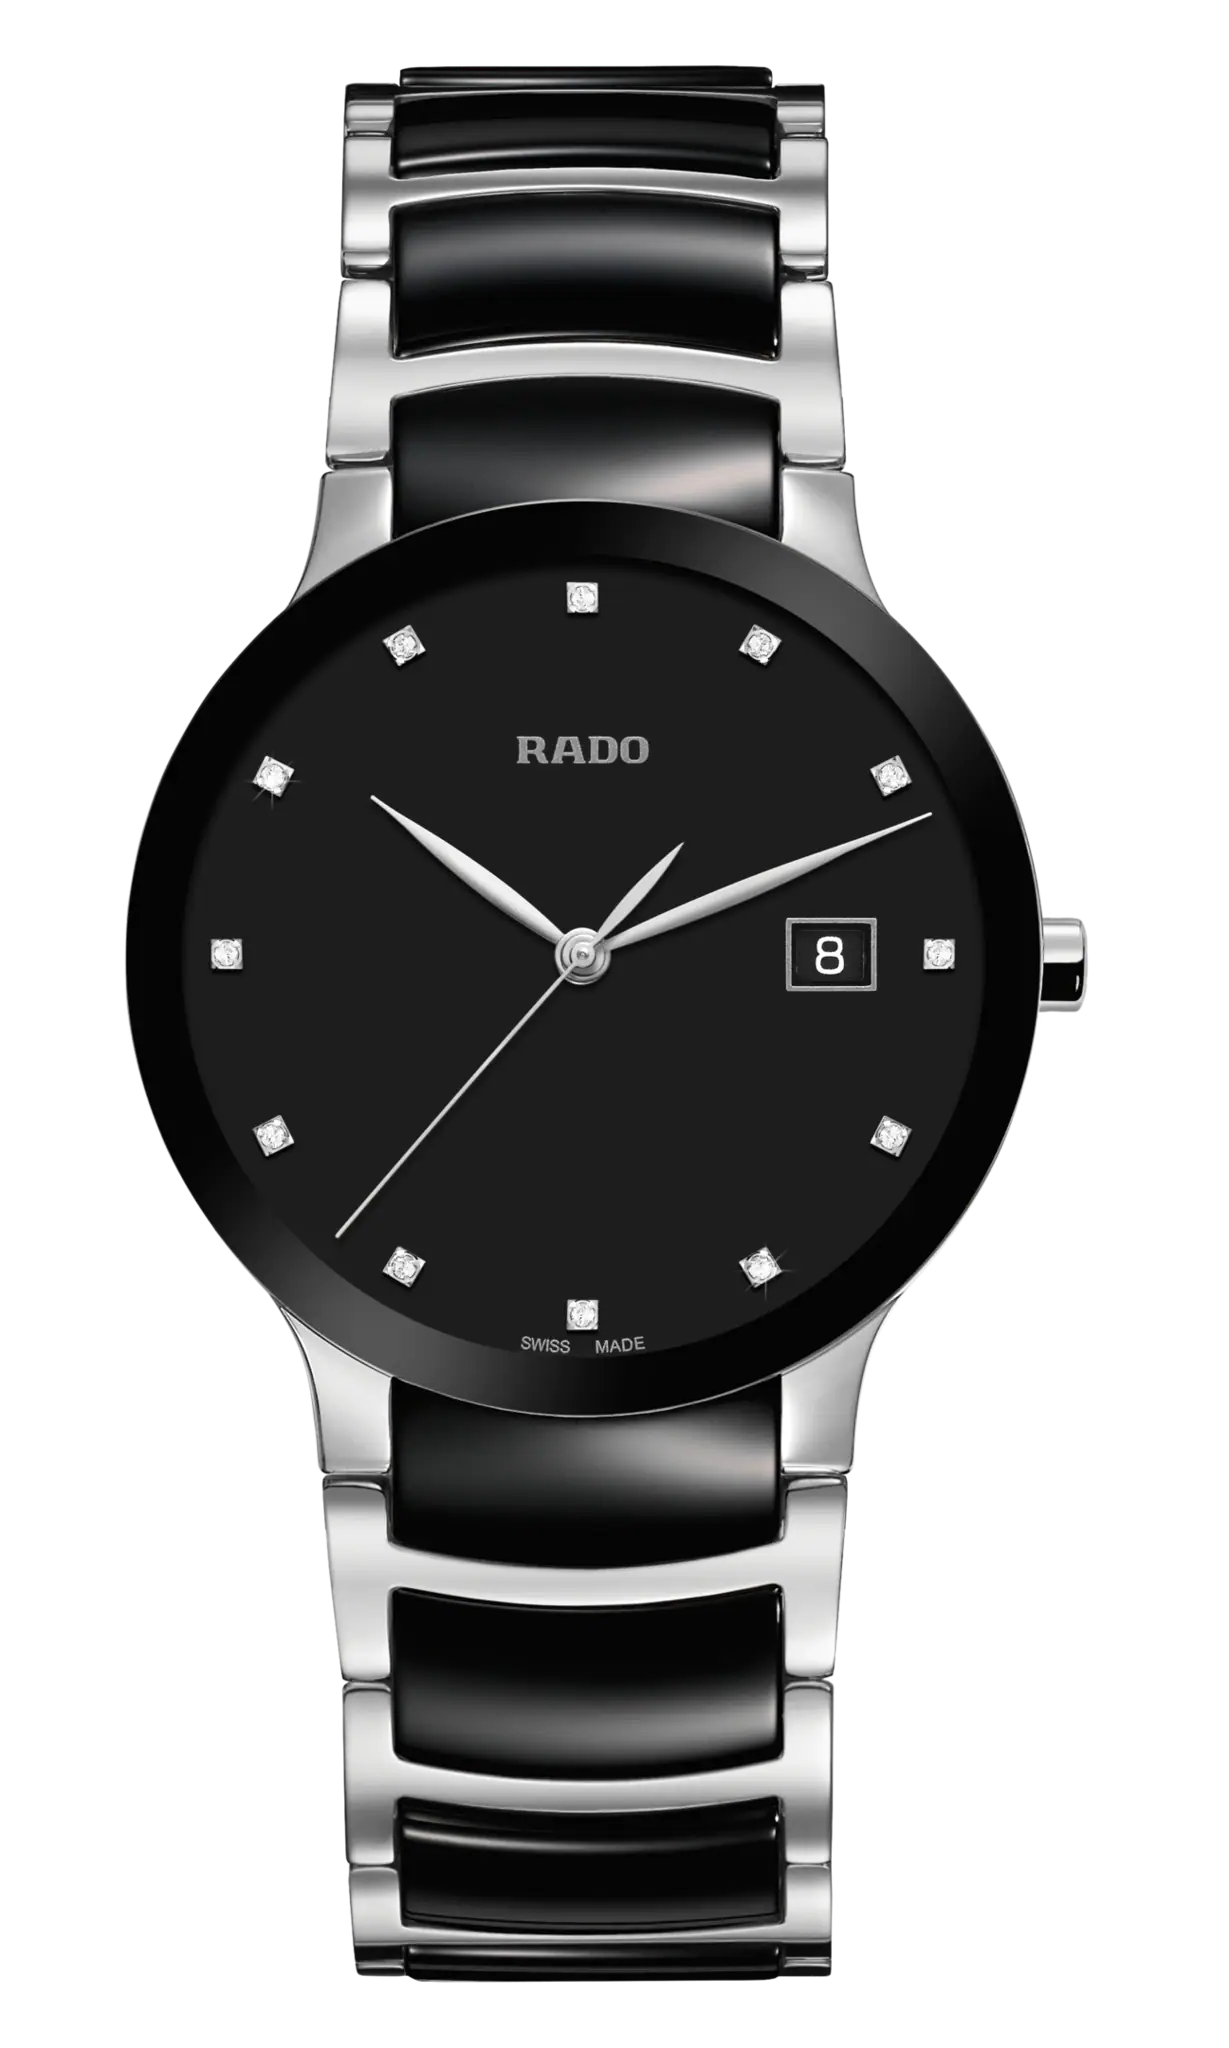 Rado Watches Price In Pakistan